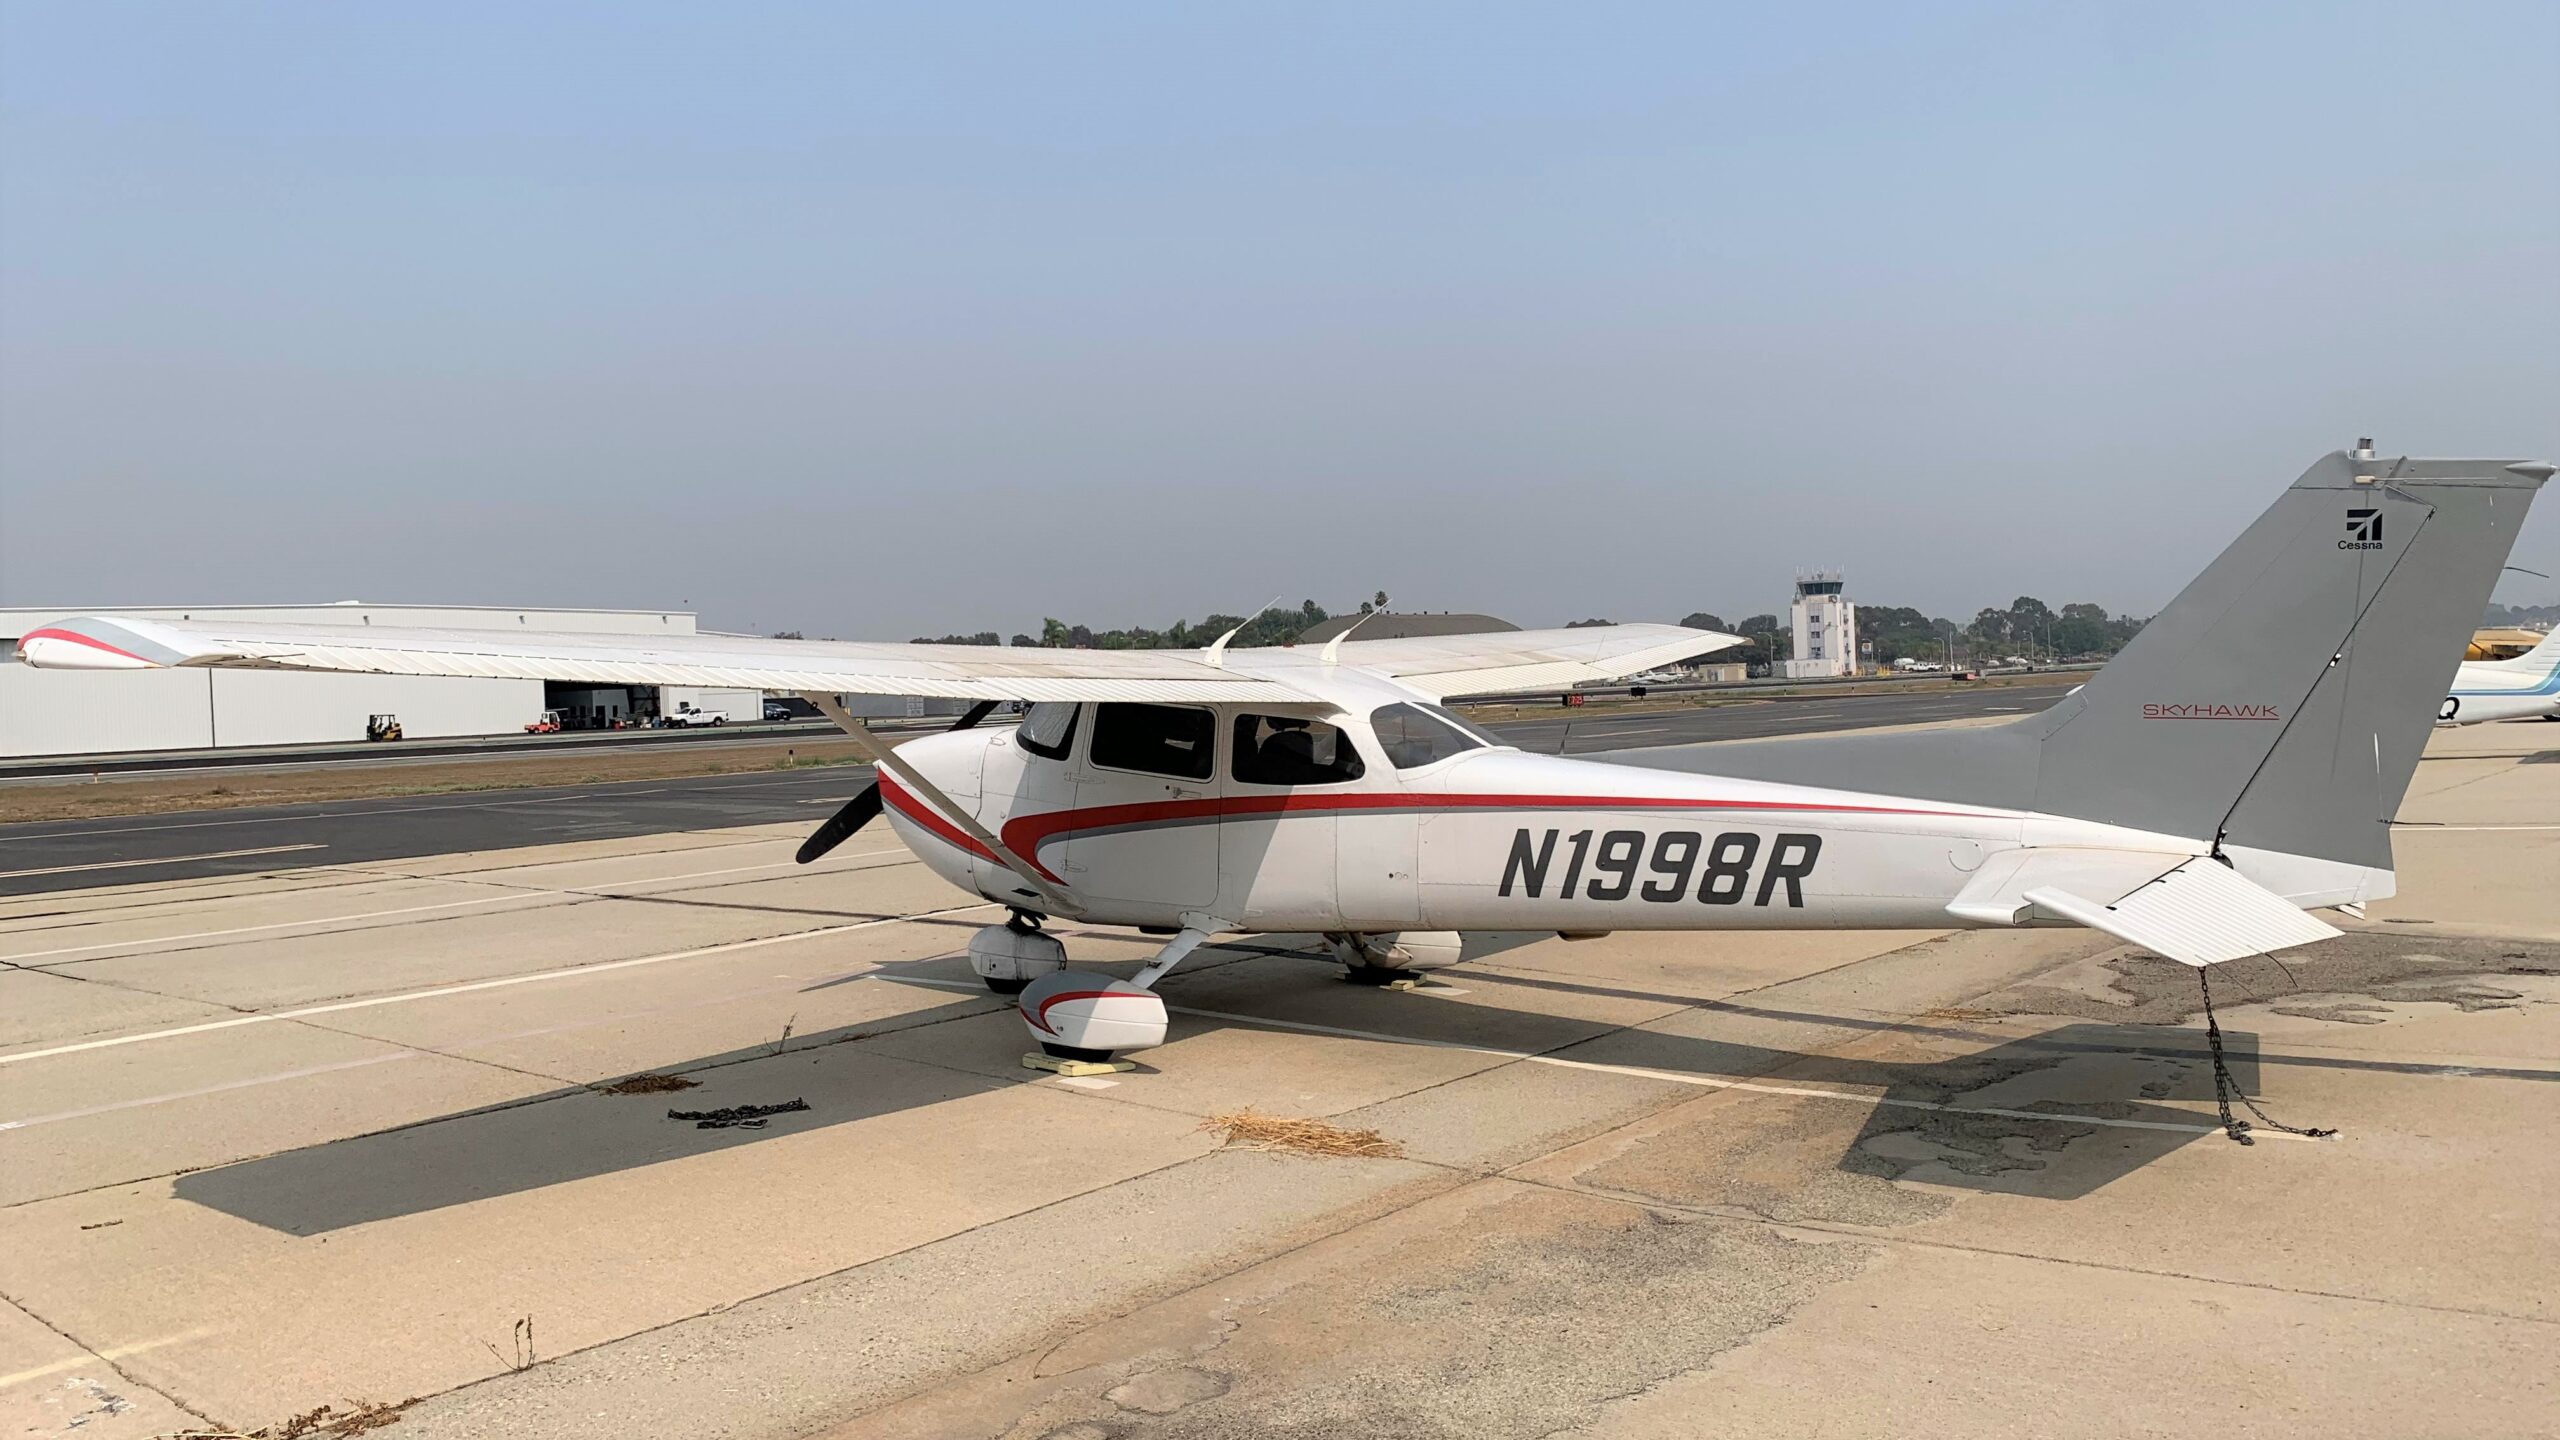 N1998R – 1998 Cessna 172R